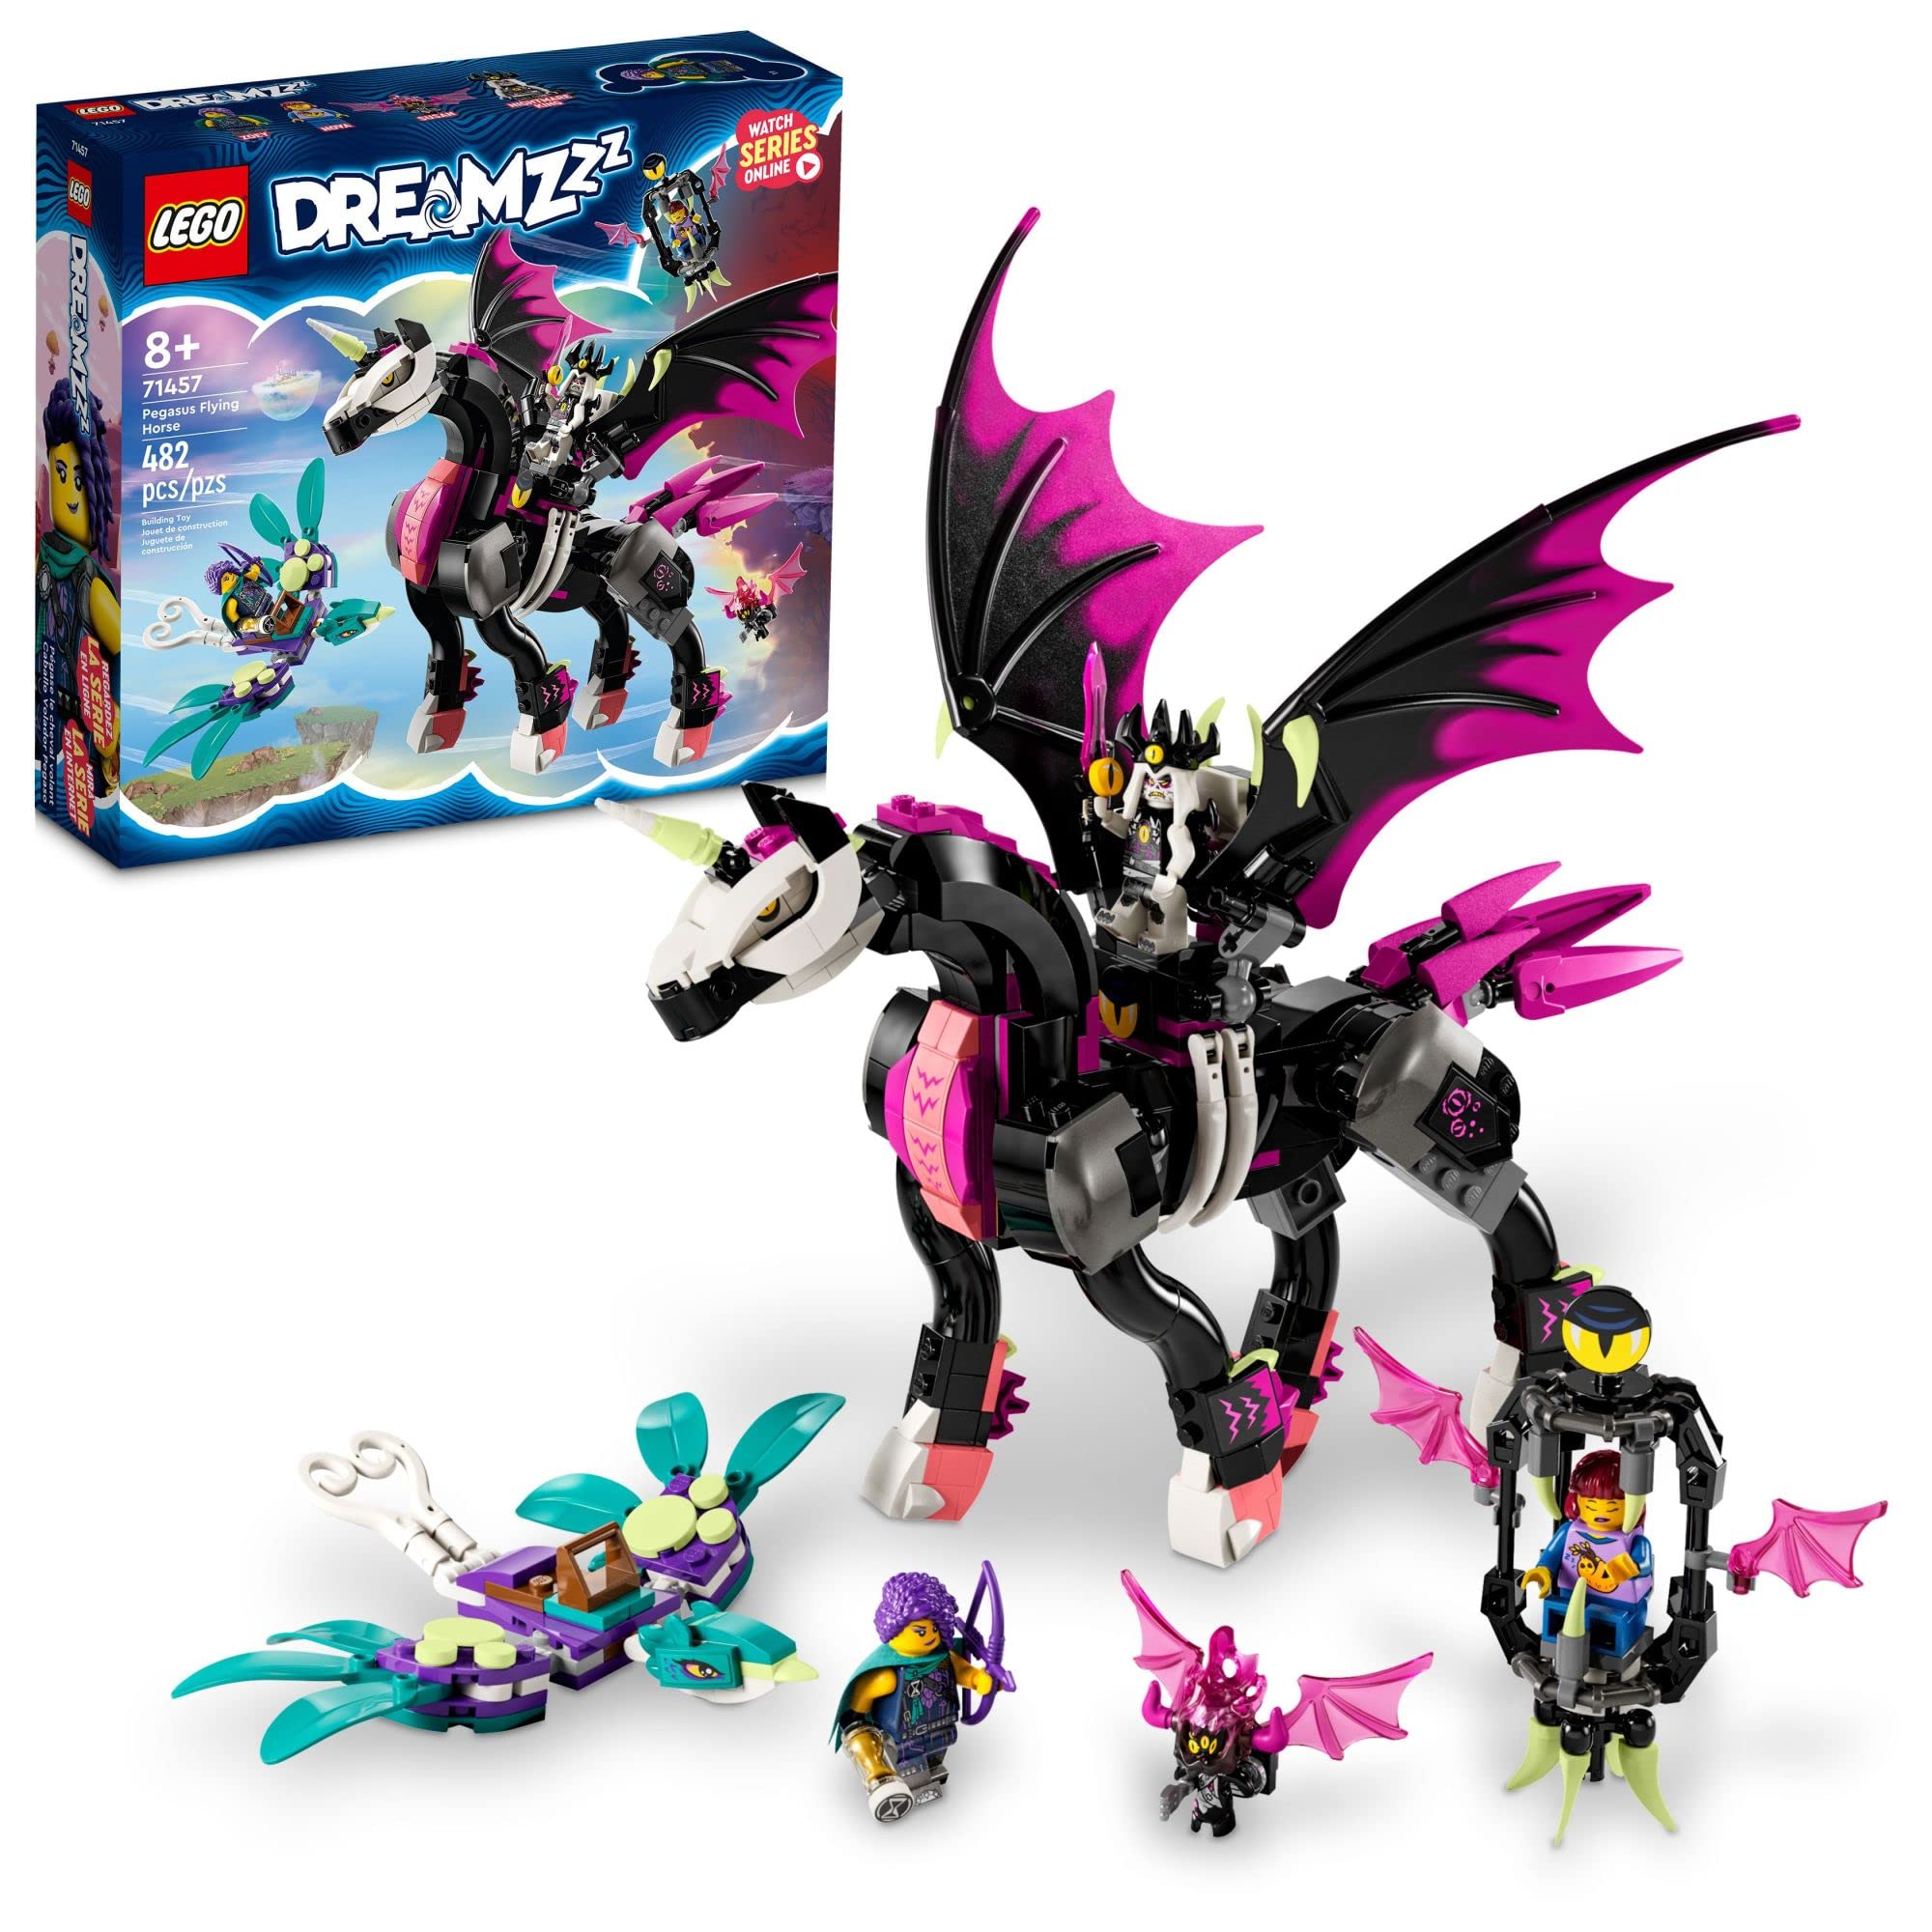 LEGO DREAMZzz Pegasus Flying Horse